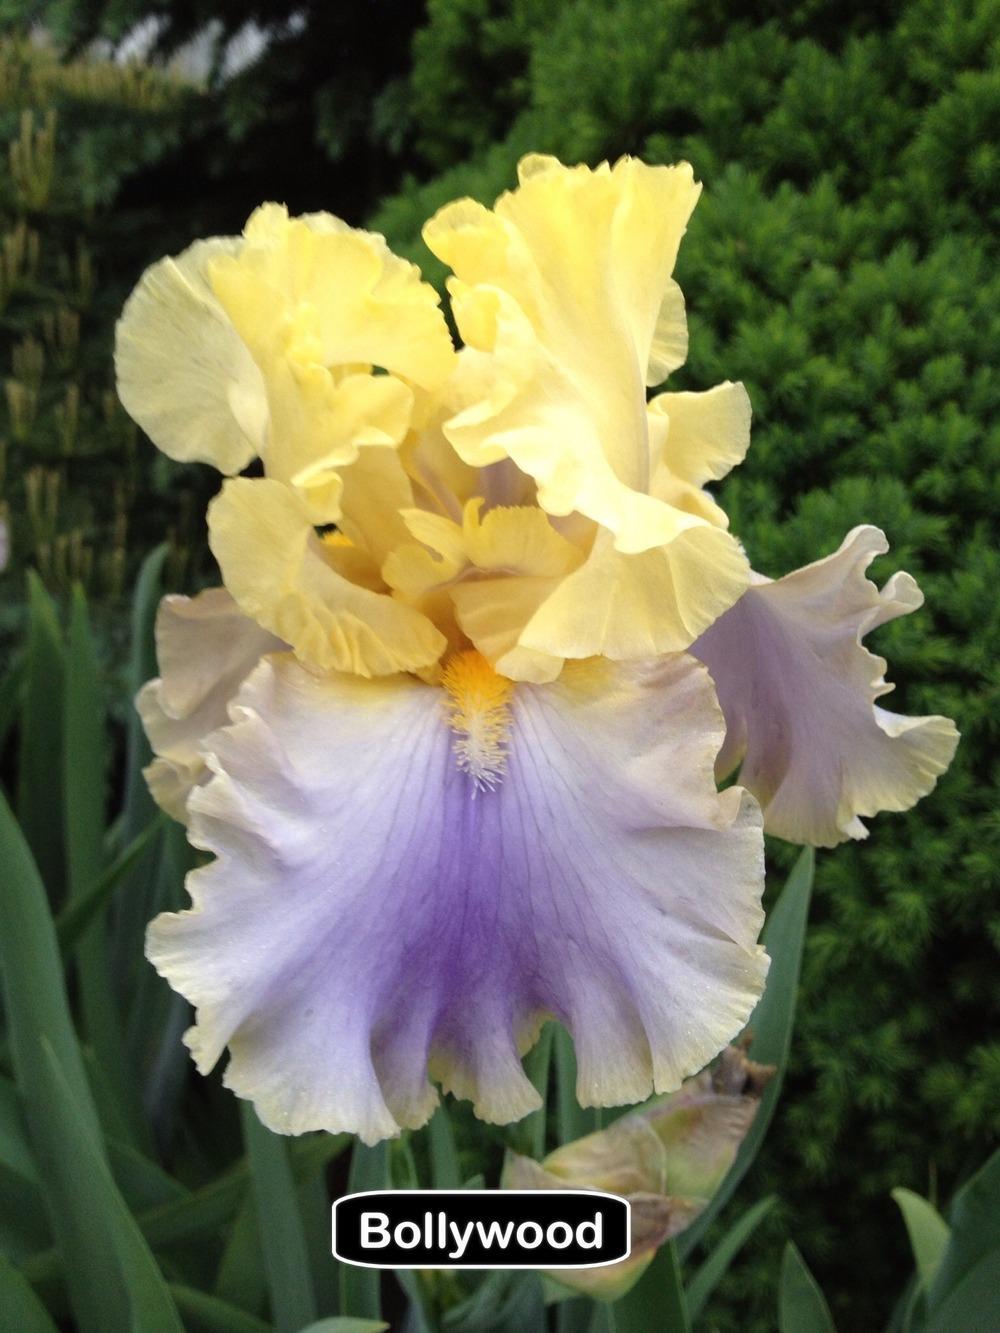 Photo of Tall Bearded Iris (Iris 'Bollywood') uploaded by Njiris